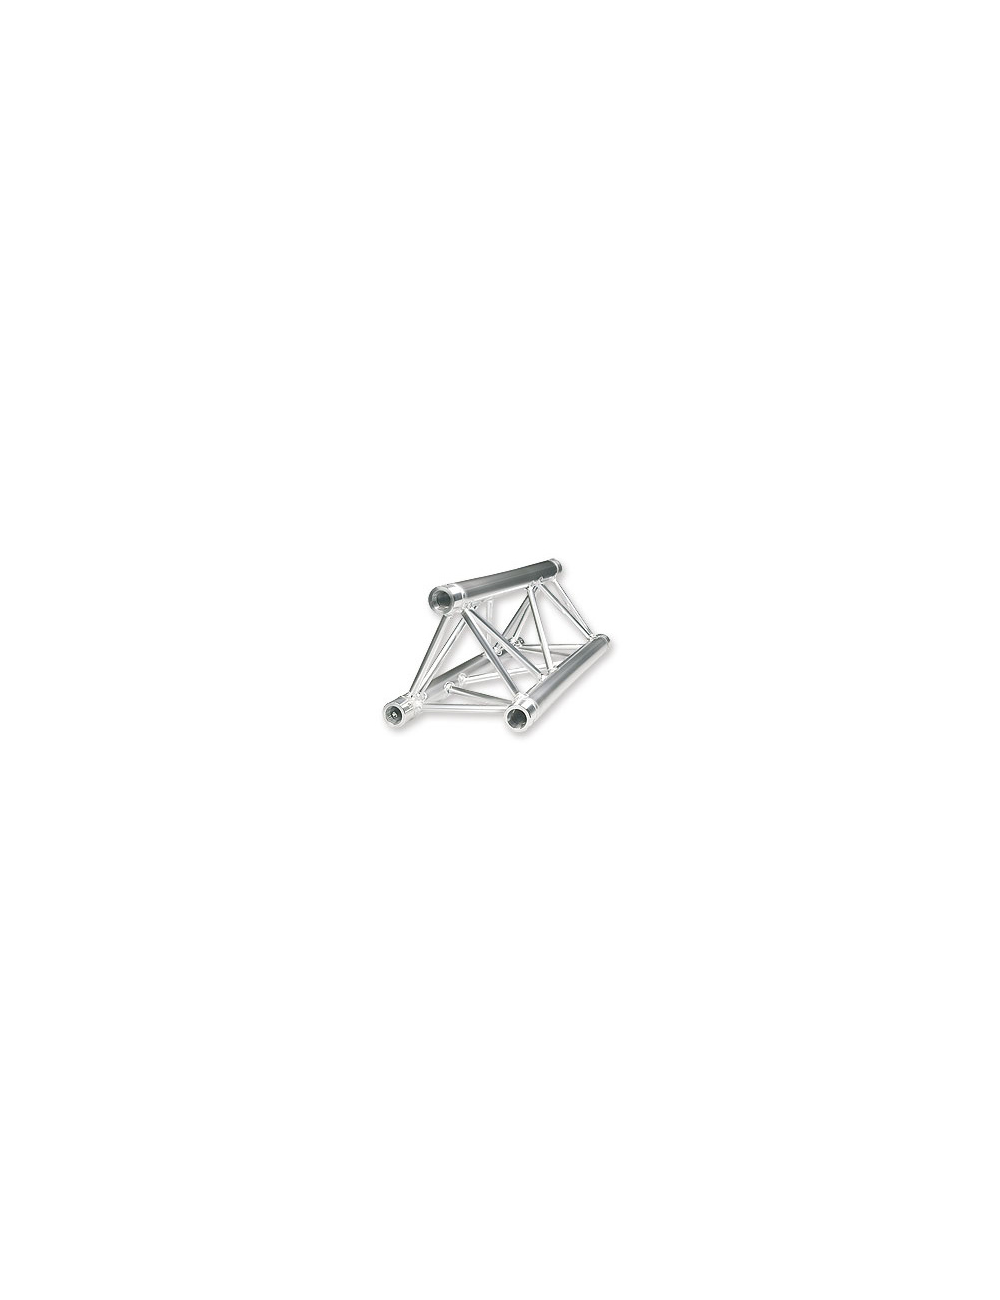 Triangular structure 290 ASD 0m29 - SX29029